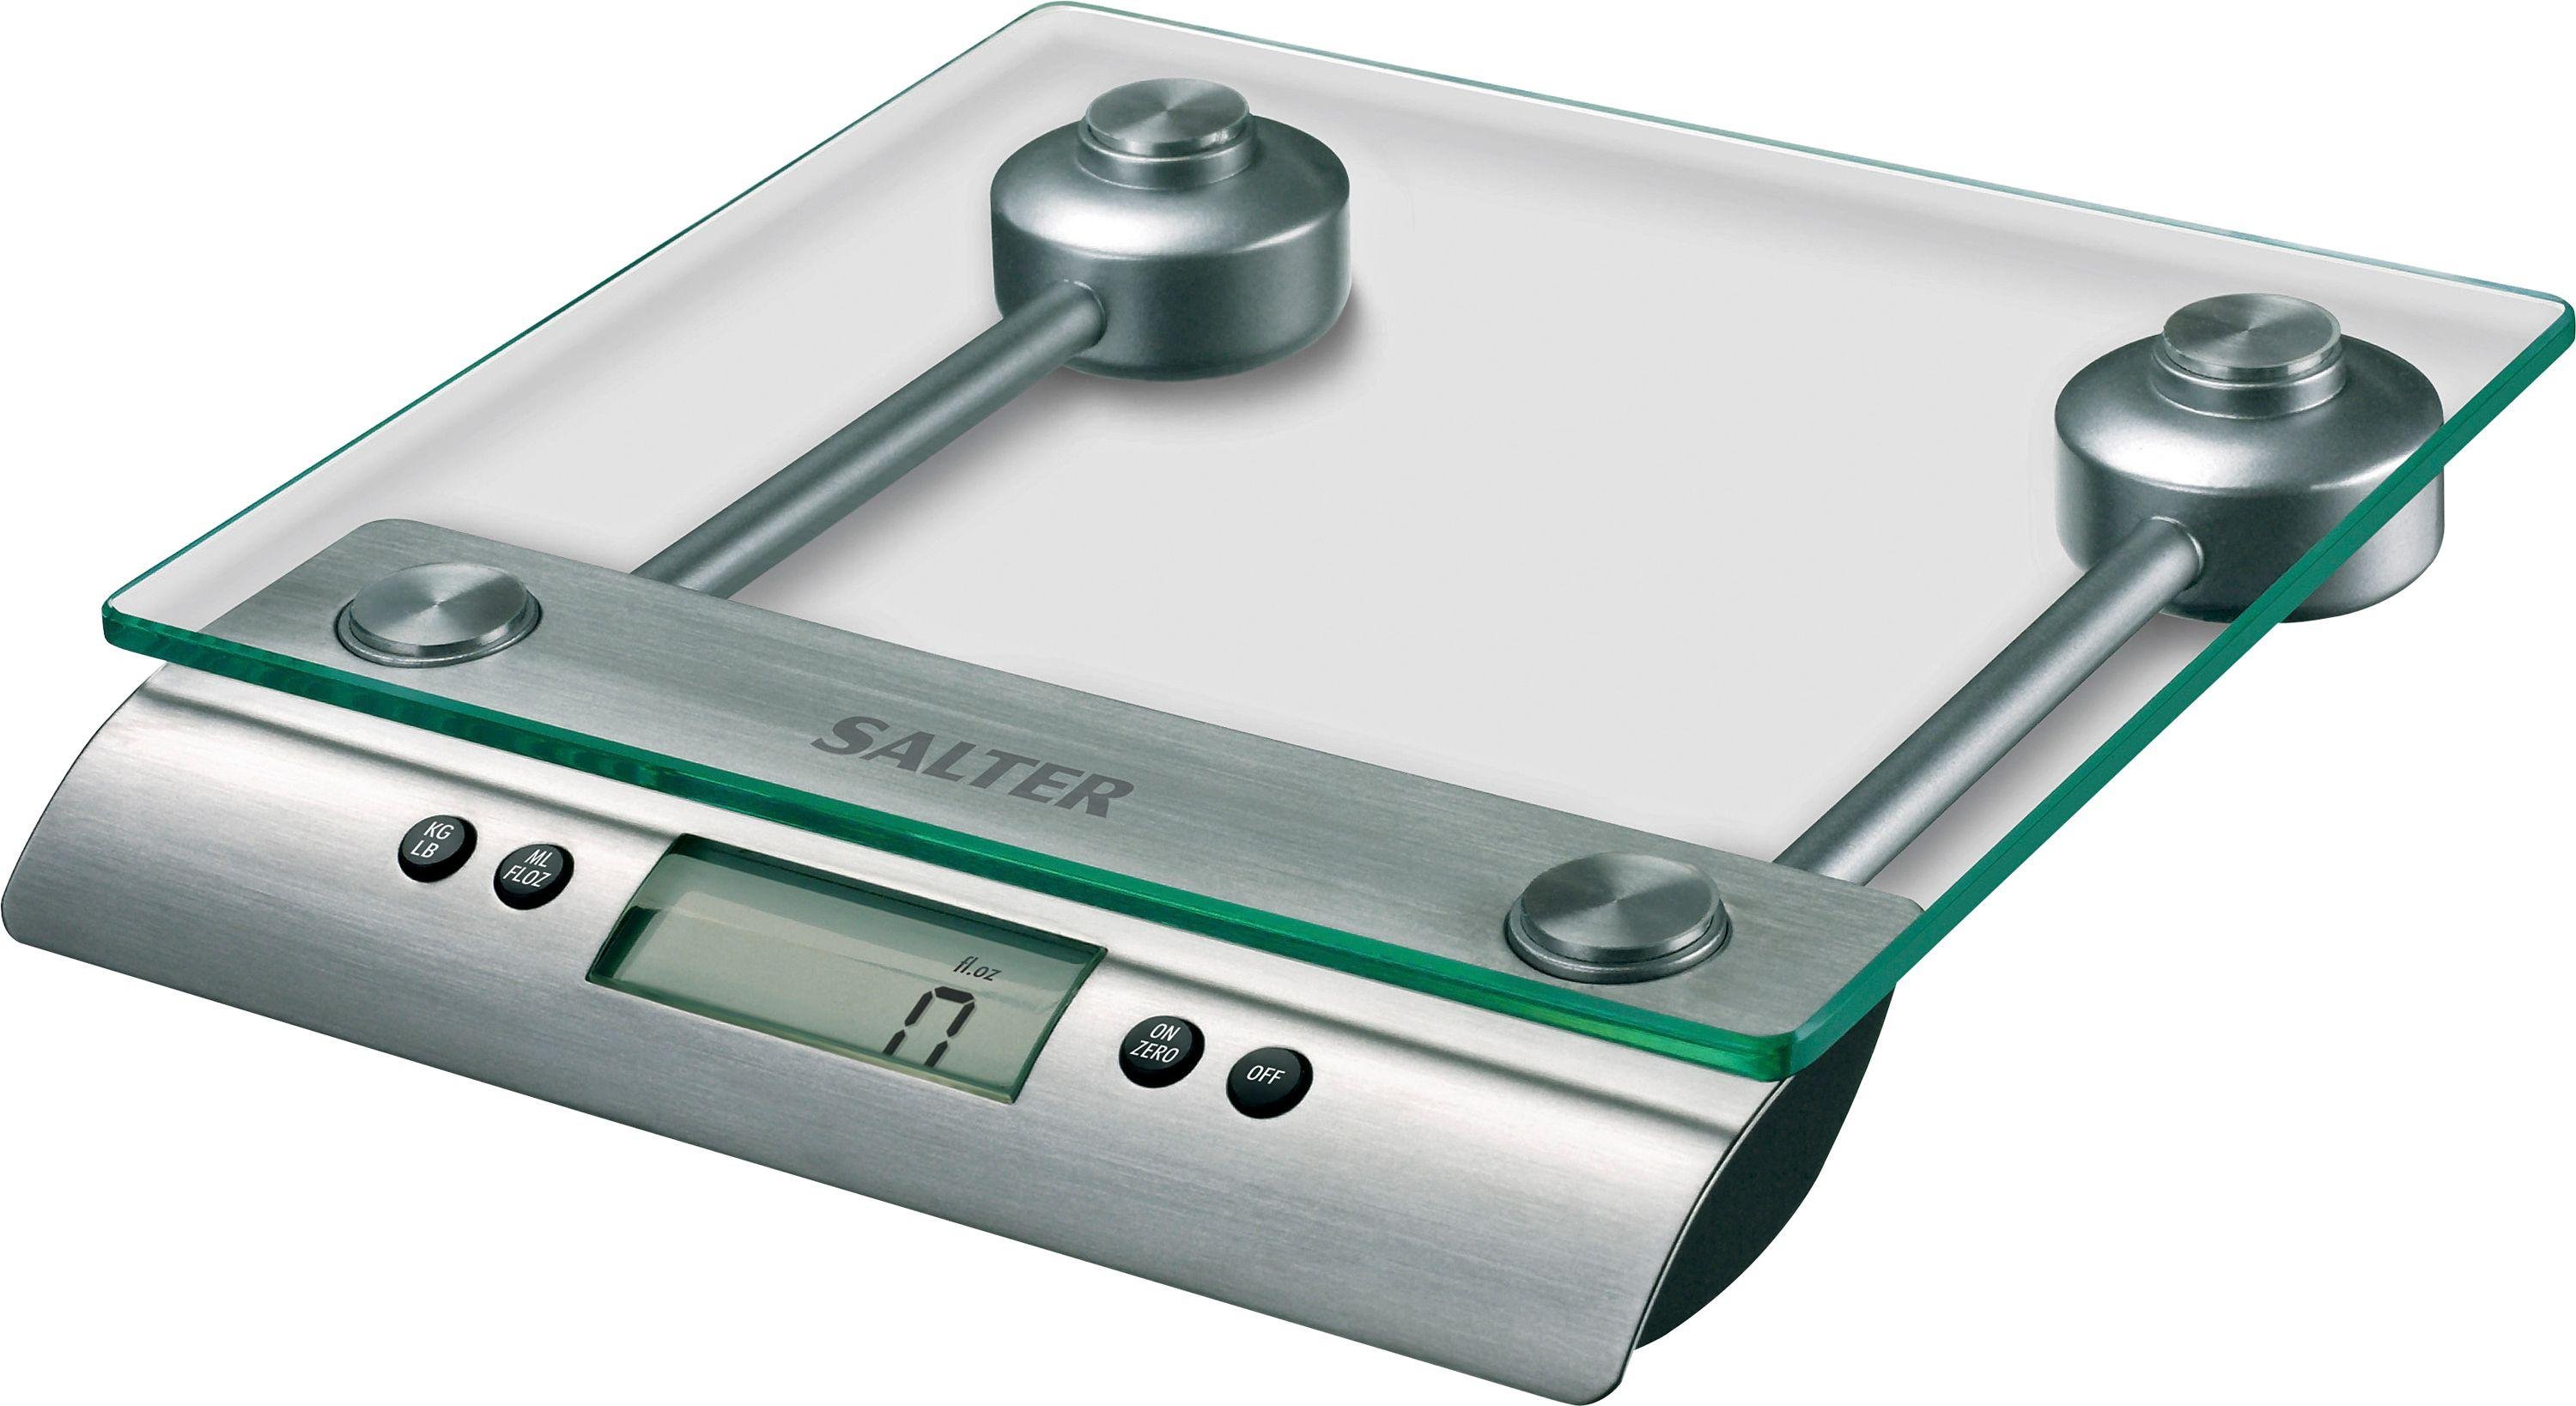 Salter Glass Kitchen Scale - Silver